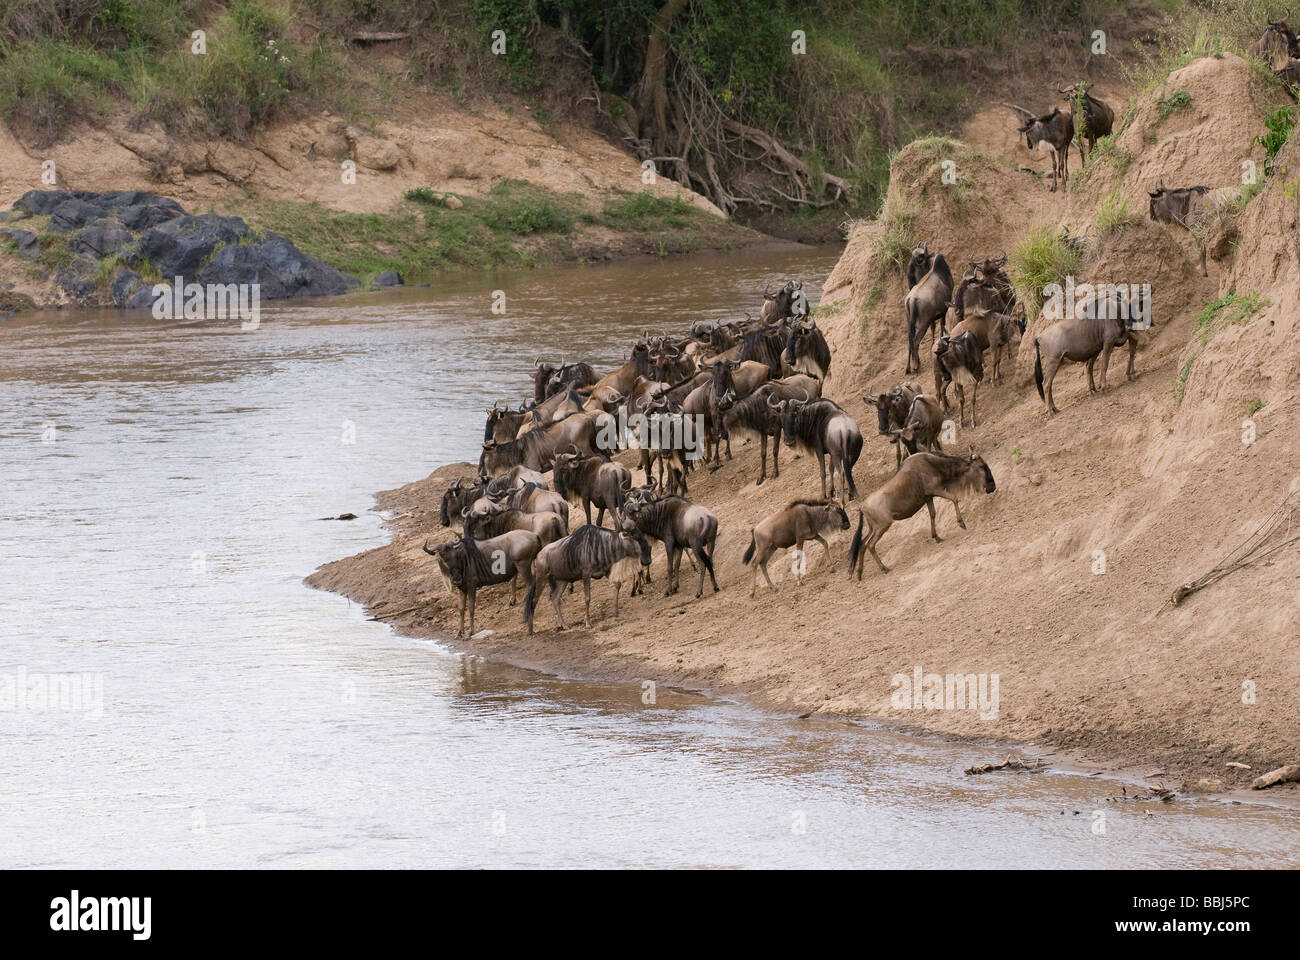 Migration von der blaue Gnus, Connochaetes Taurinus Albojubatus Masai Mara NATIONAL RESERVE Kenia in Ostafrika Stockfoto